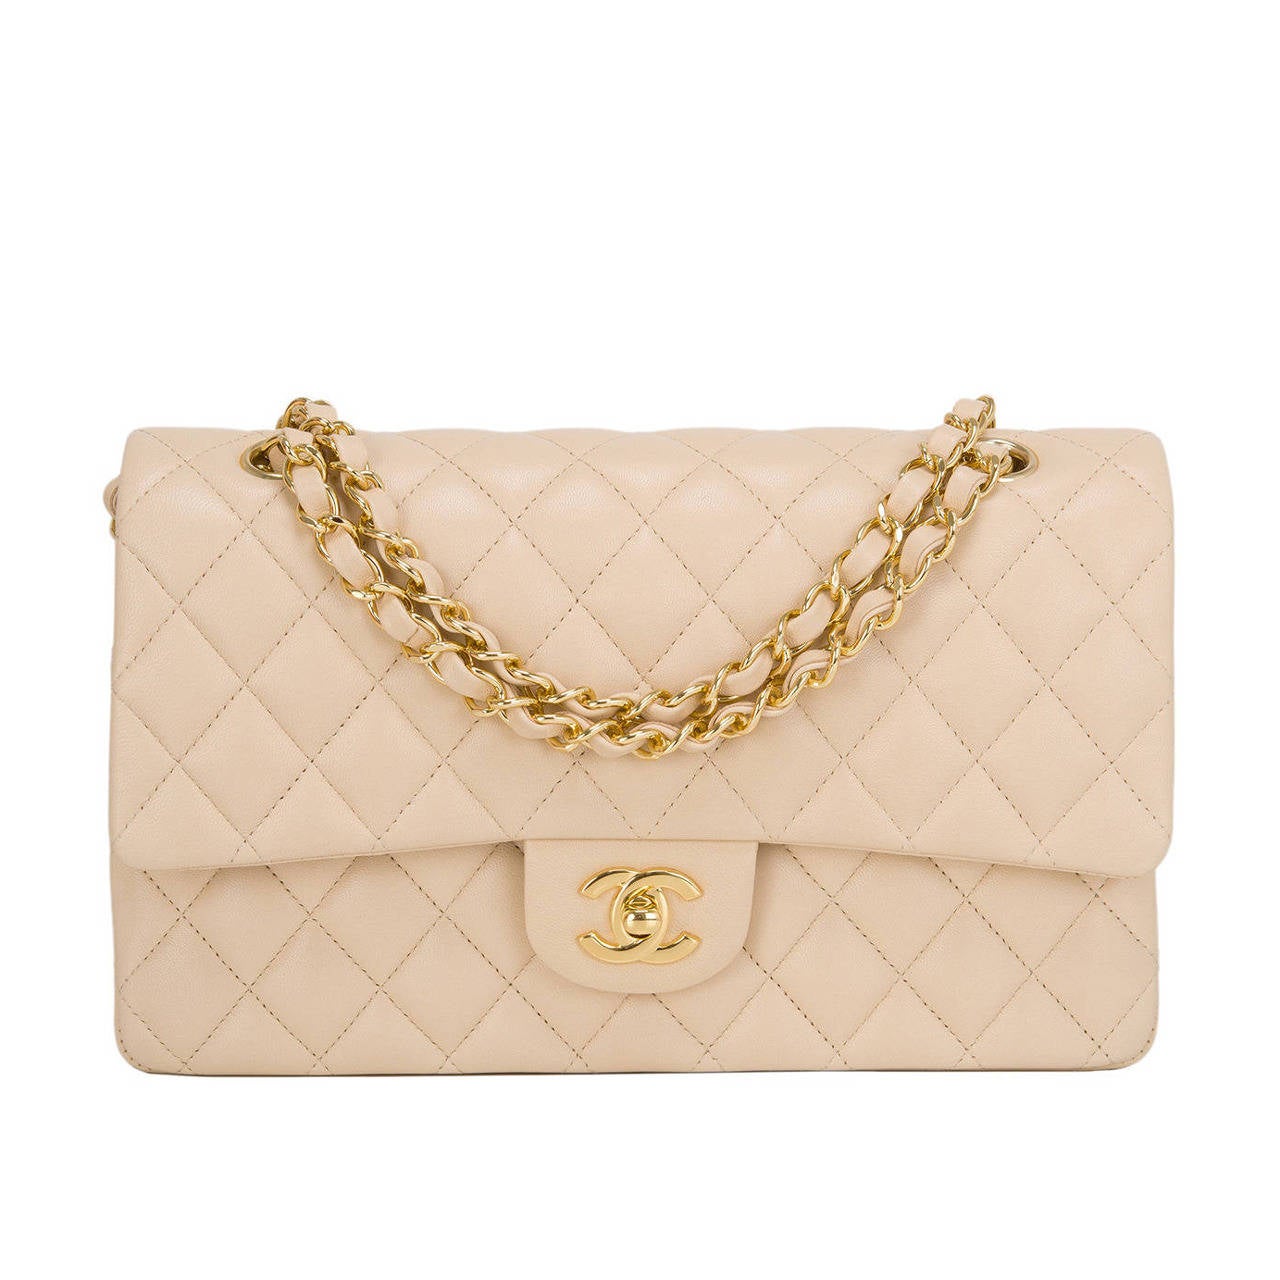 Chanel Light Beige Lambskin Large Classic Double Flap Bag